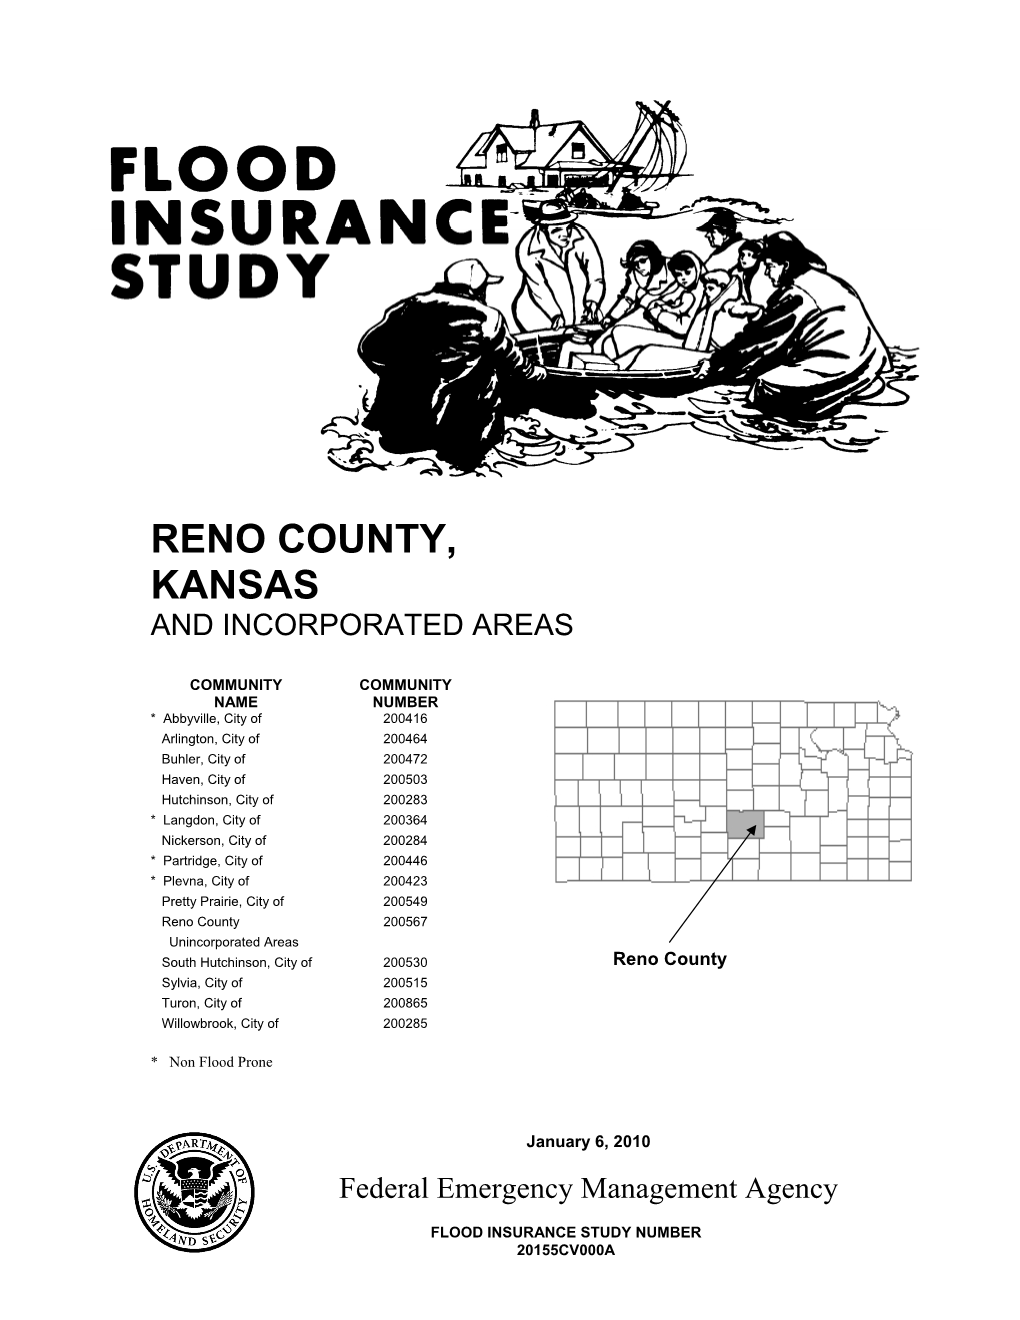 Flood Insurance Study Number 20155Cv000a